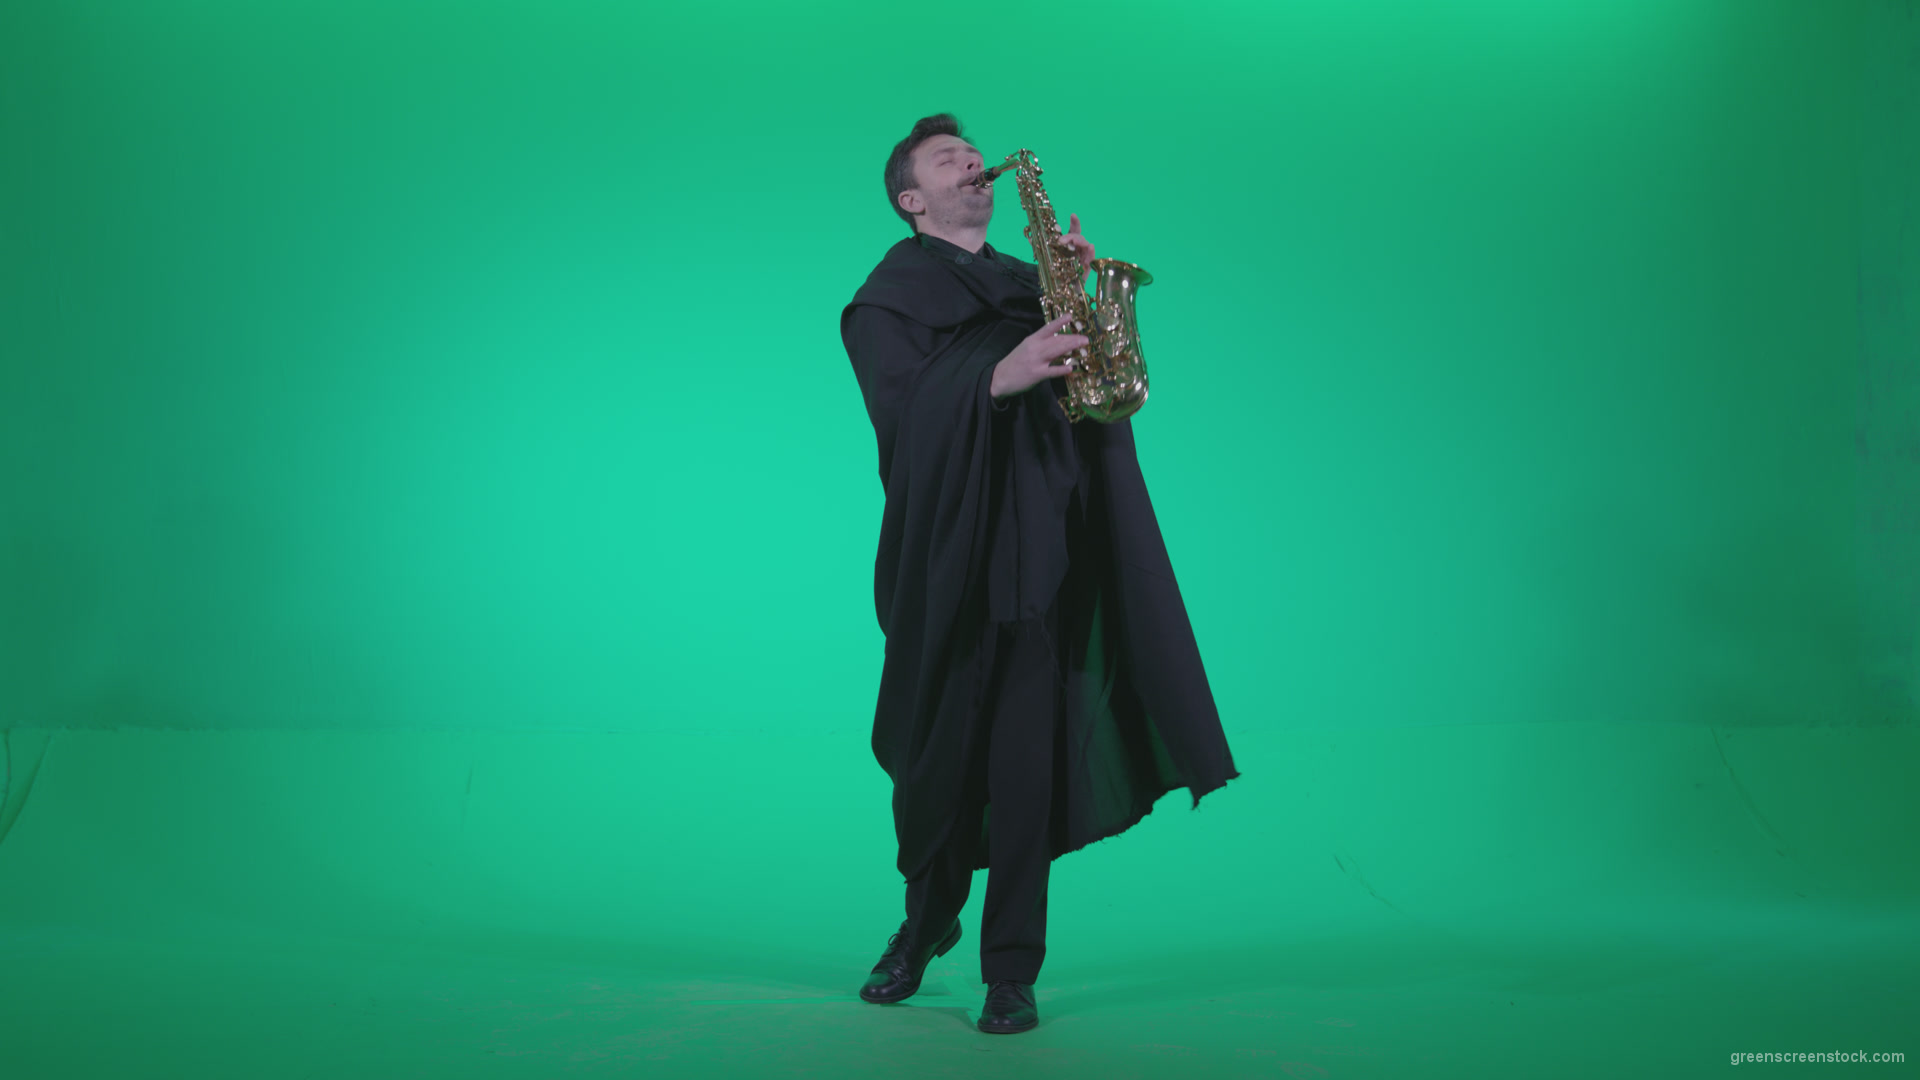 Gothic-Saxophone-Virtuoso-Performer-s3_002 Green Screen Stock